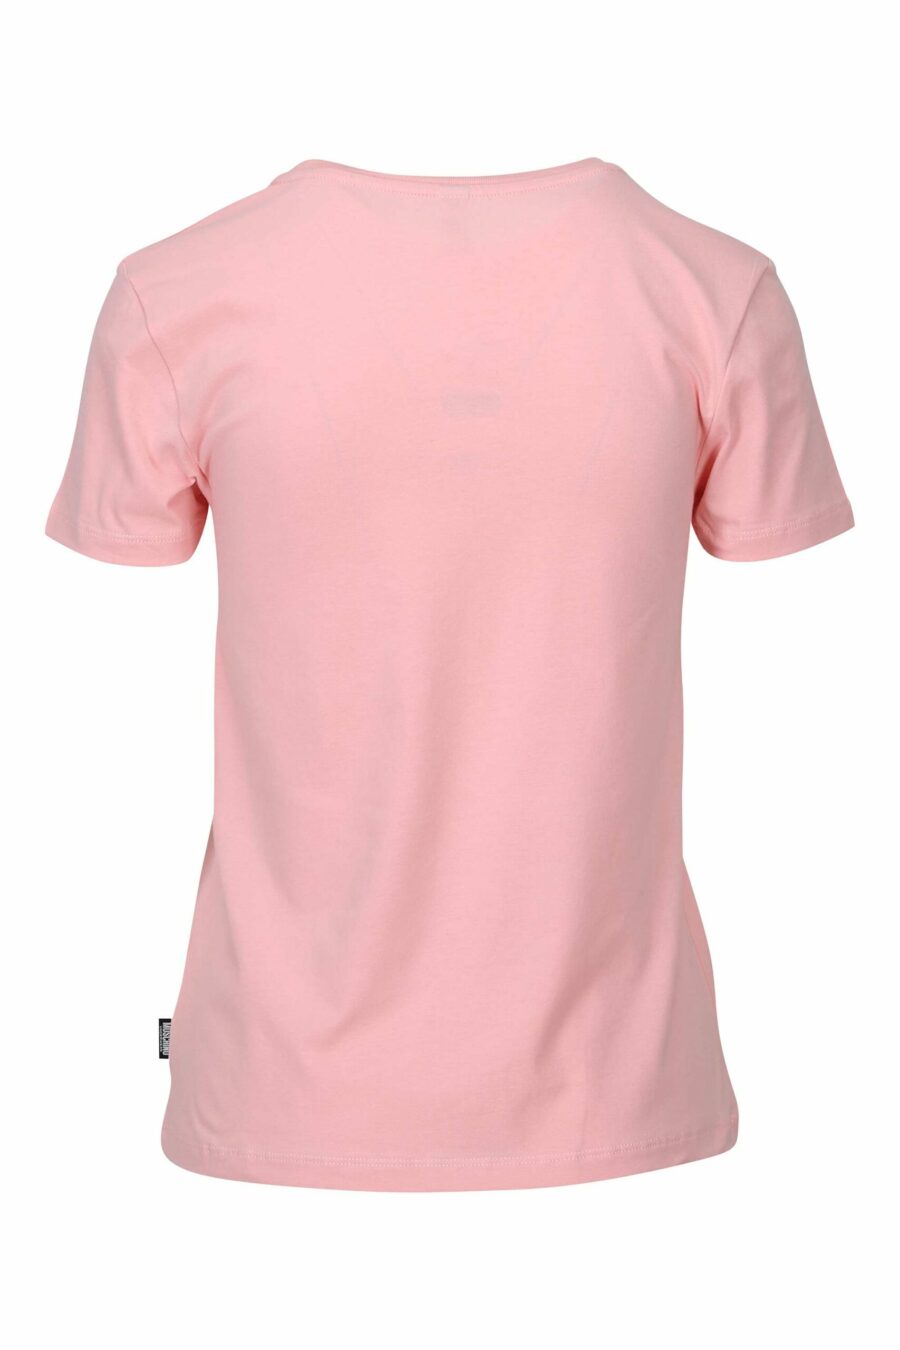 Rosa T-Shirt mit Bärenlogo-Aufnäher "underbear" - 667113034546 1 skaliert